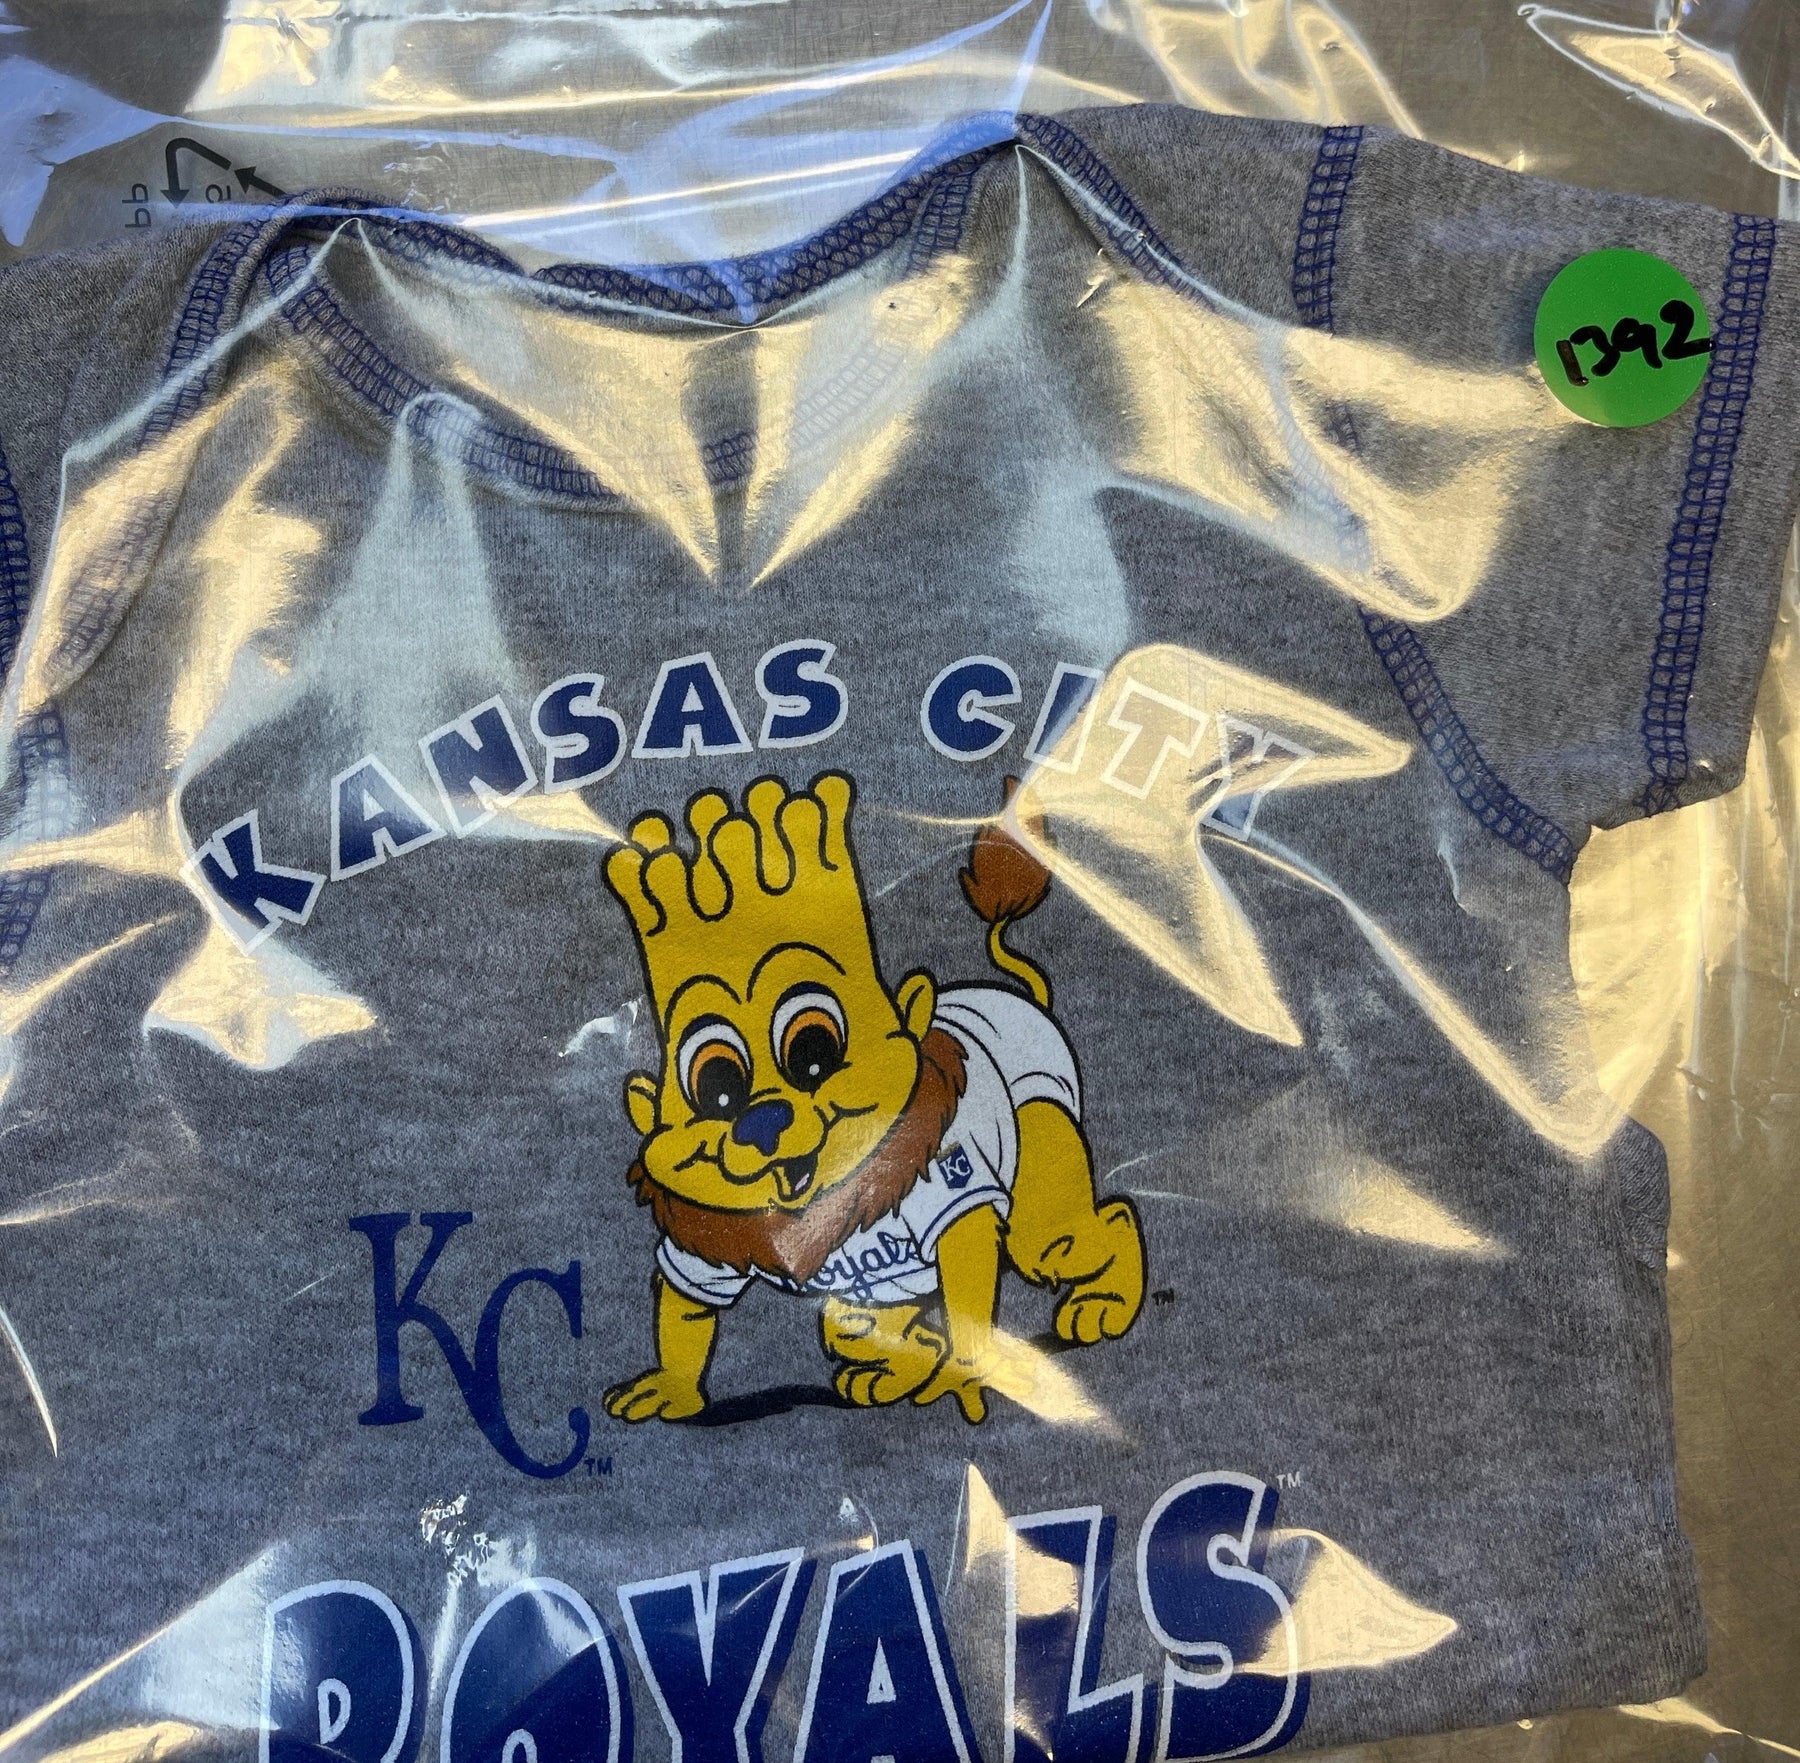 MLB Kansas City Royals Grey Bodysuit 3-6 months